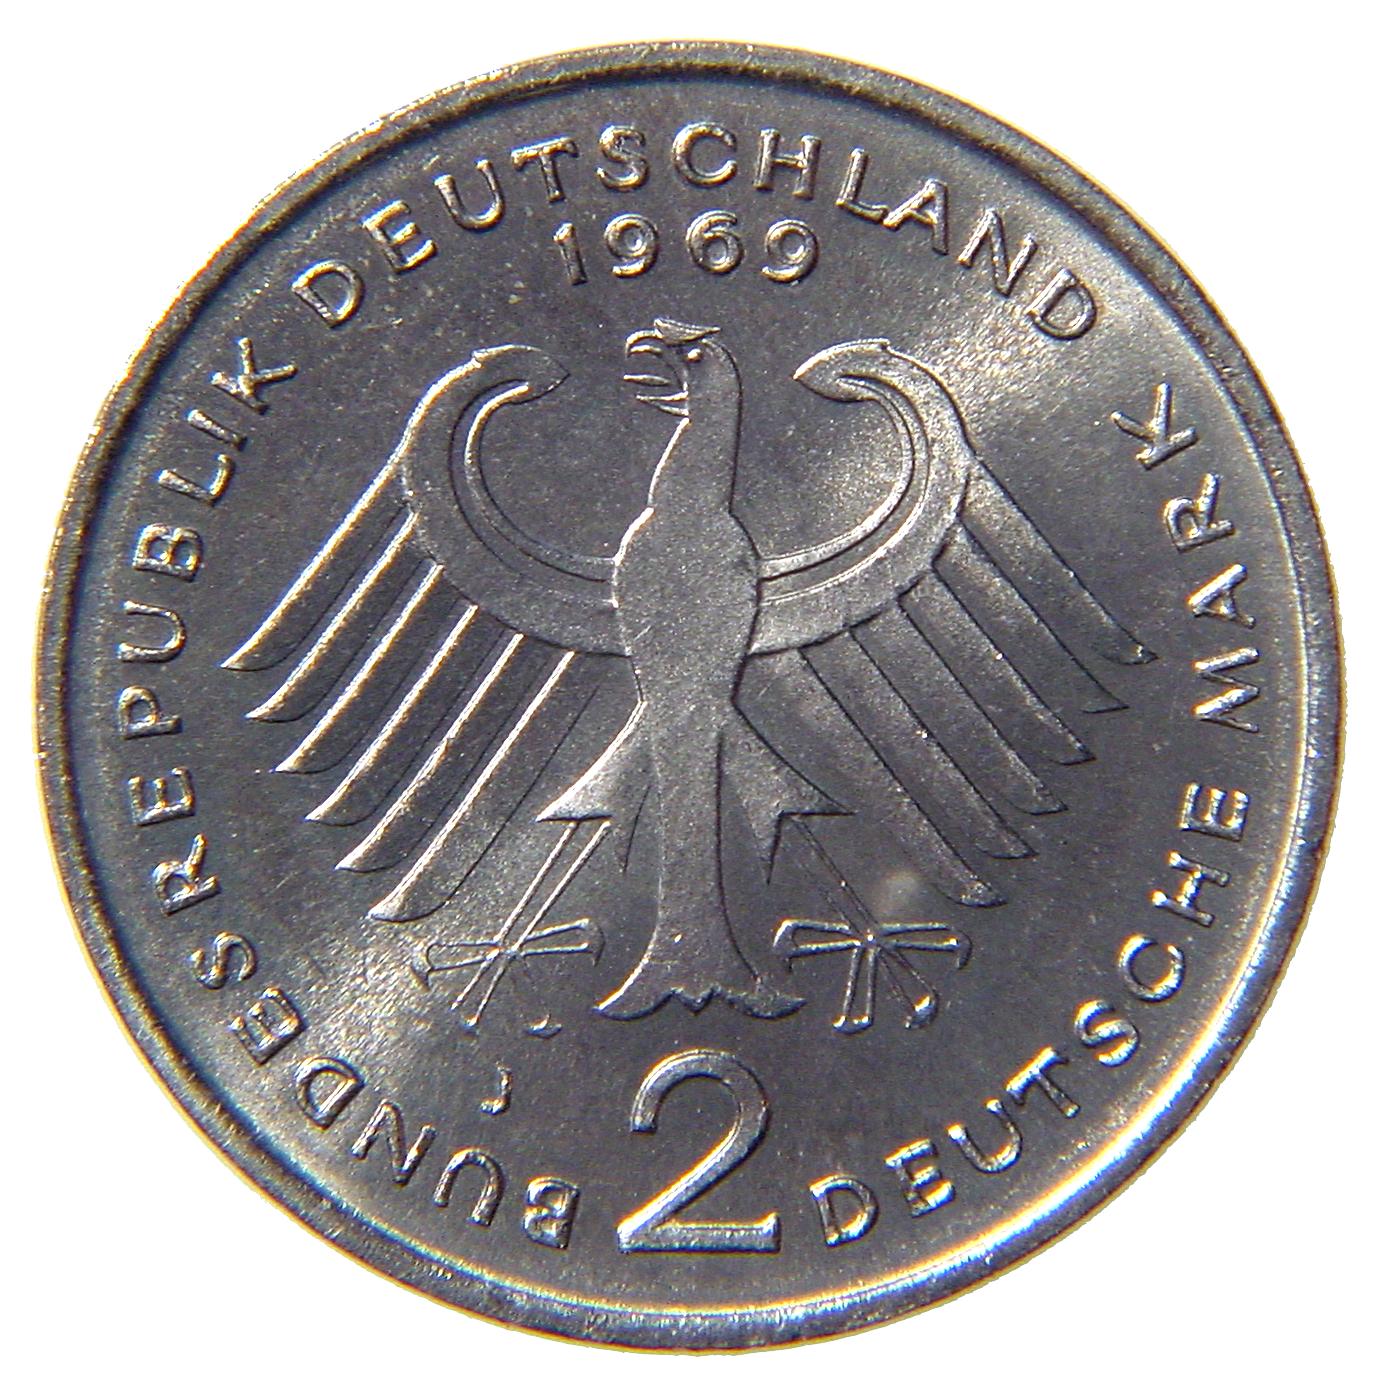 2-DM coin Adenauer - reverse